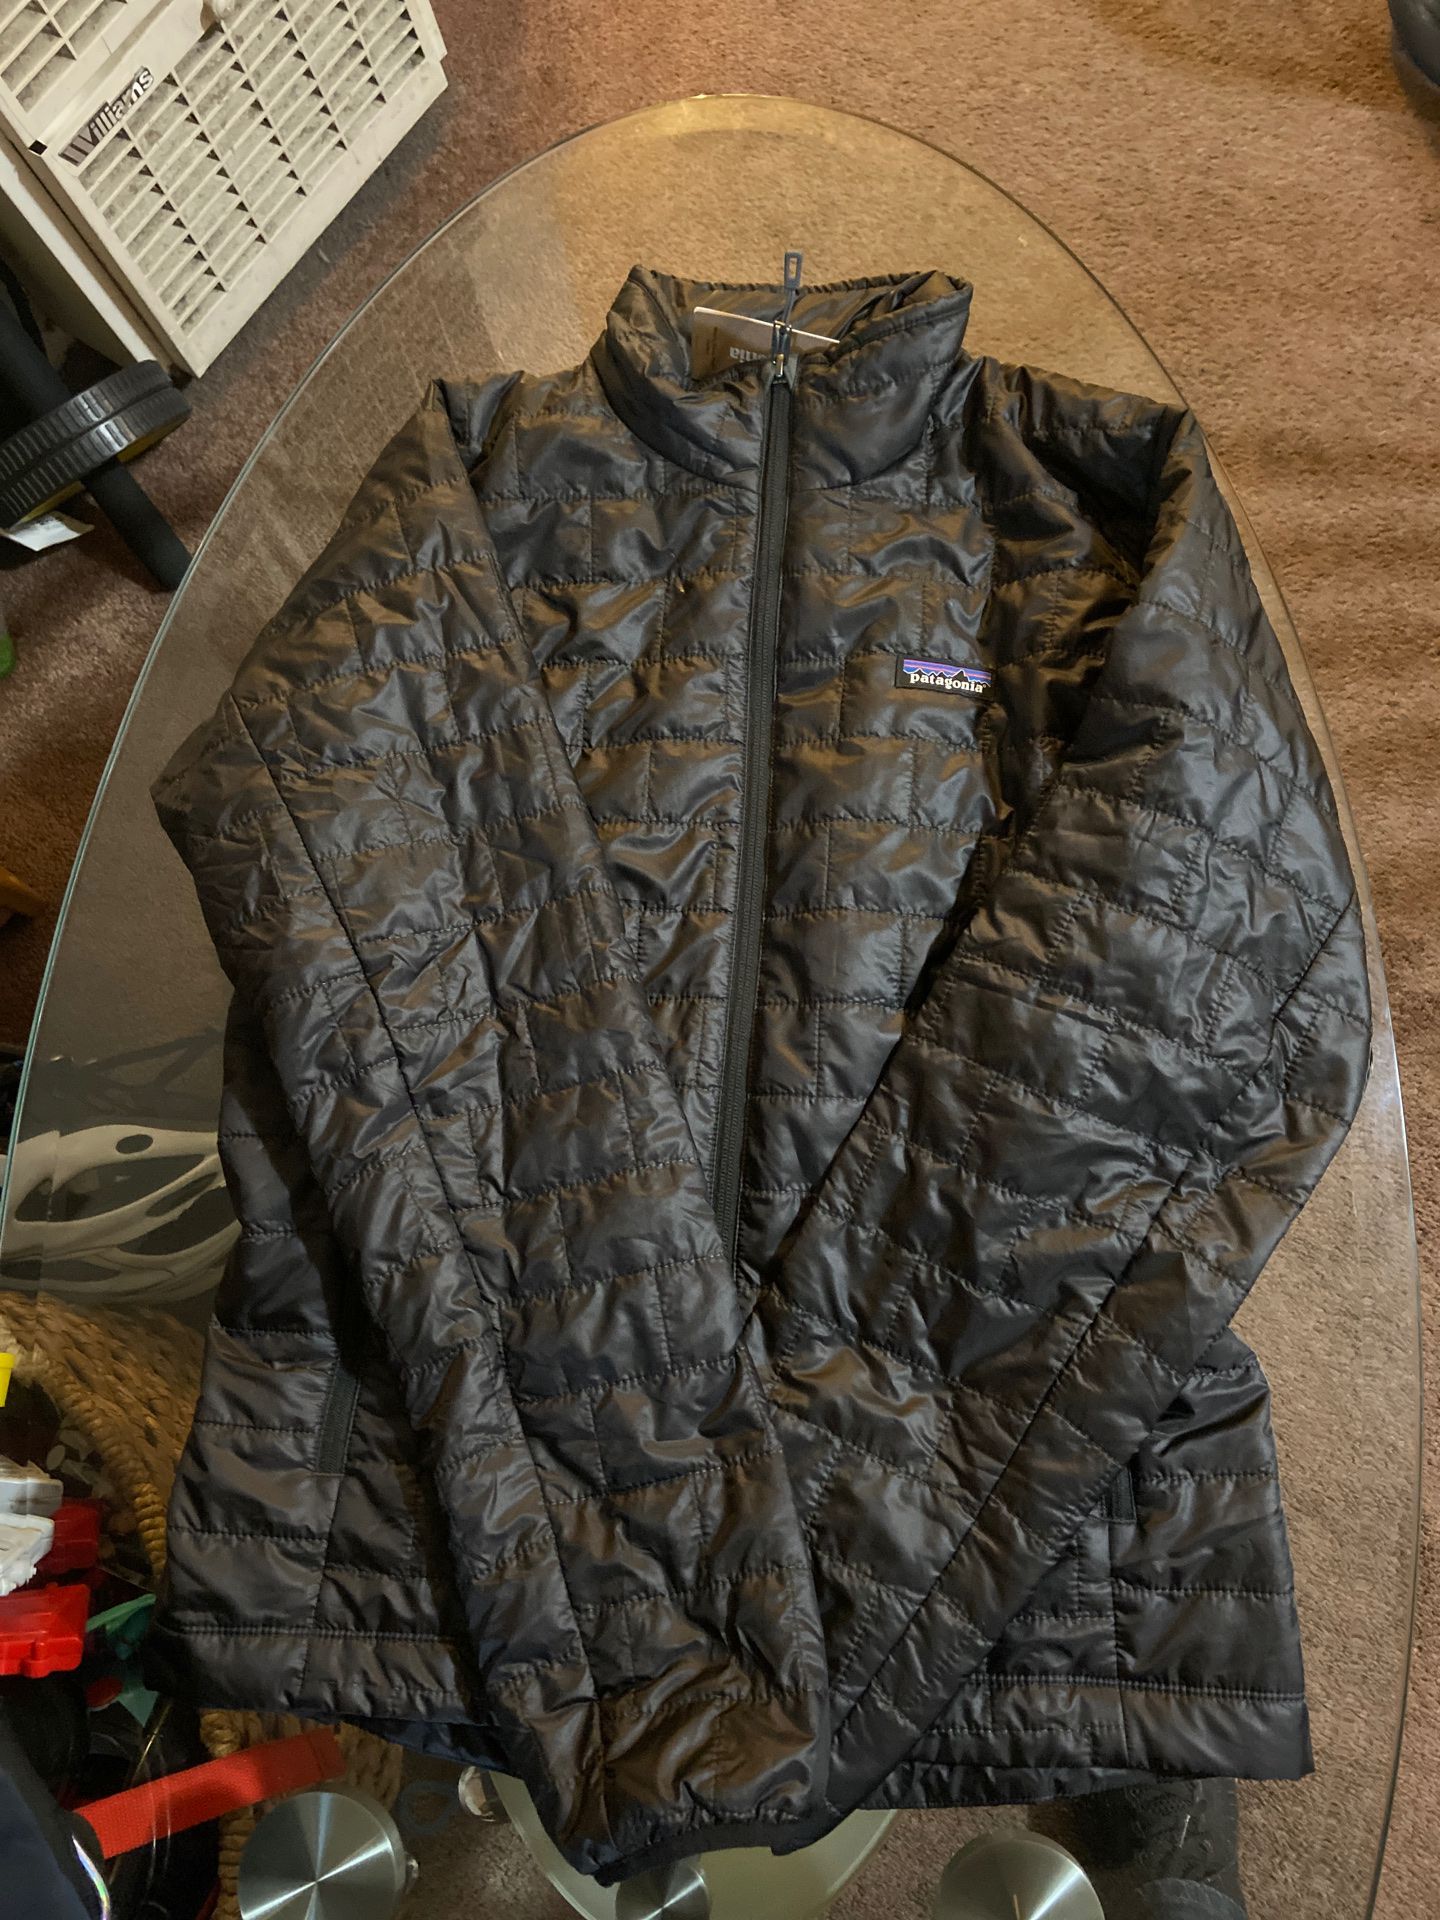 Patagonia Men’s jacket small size